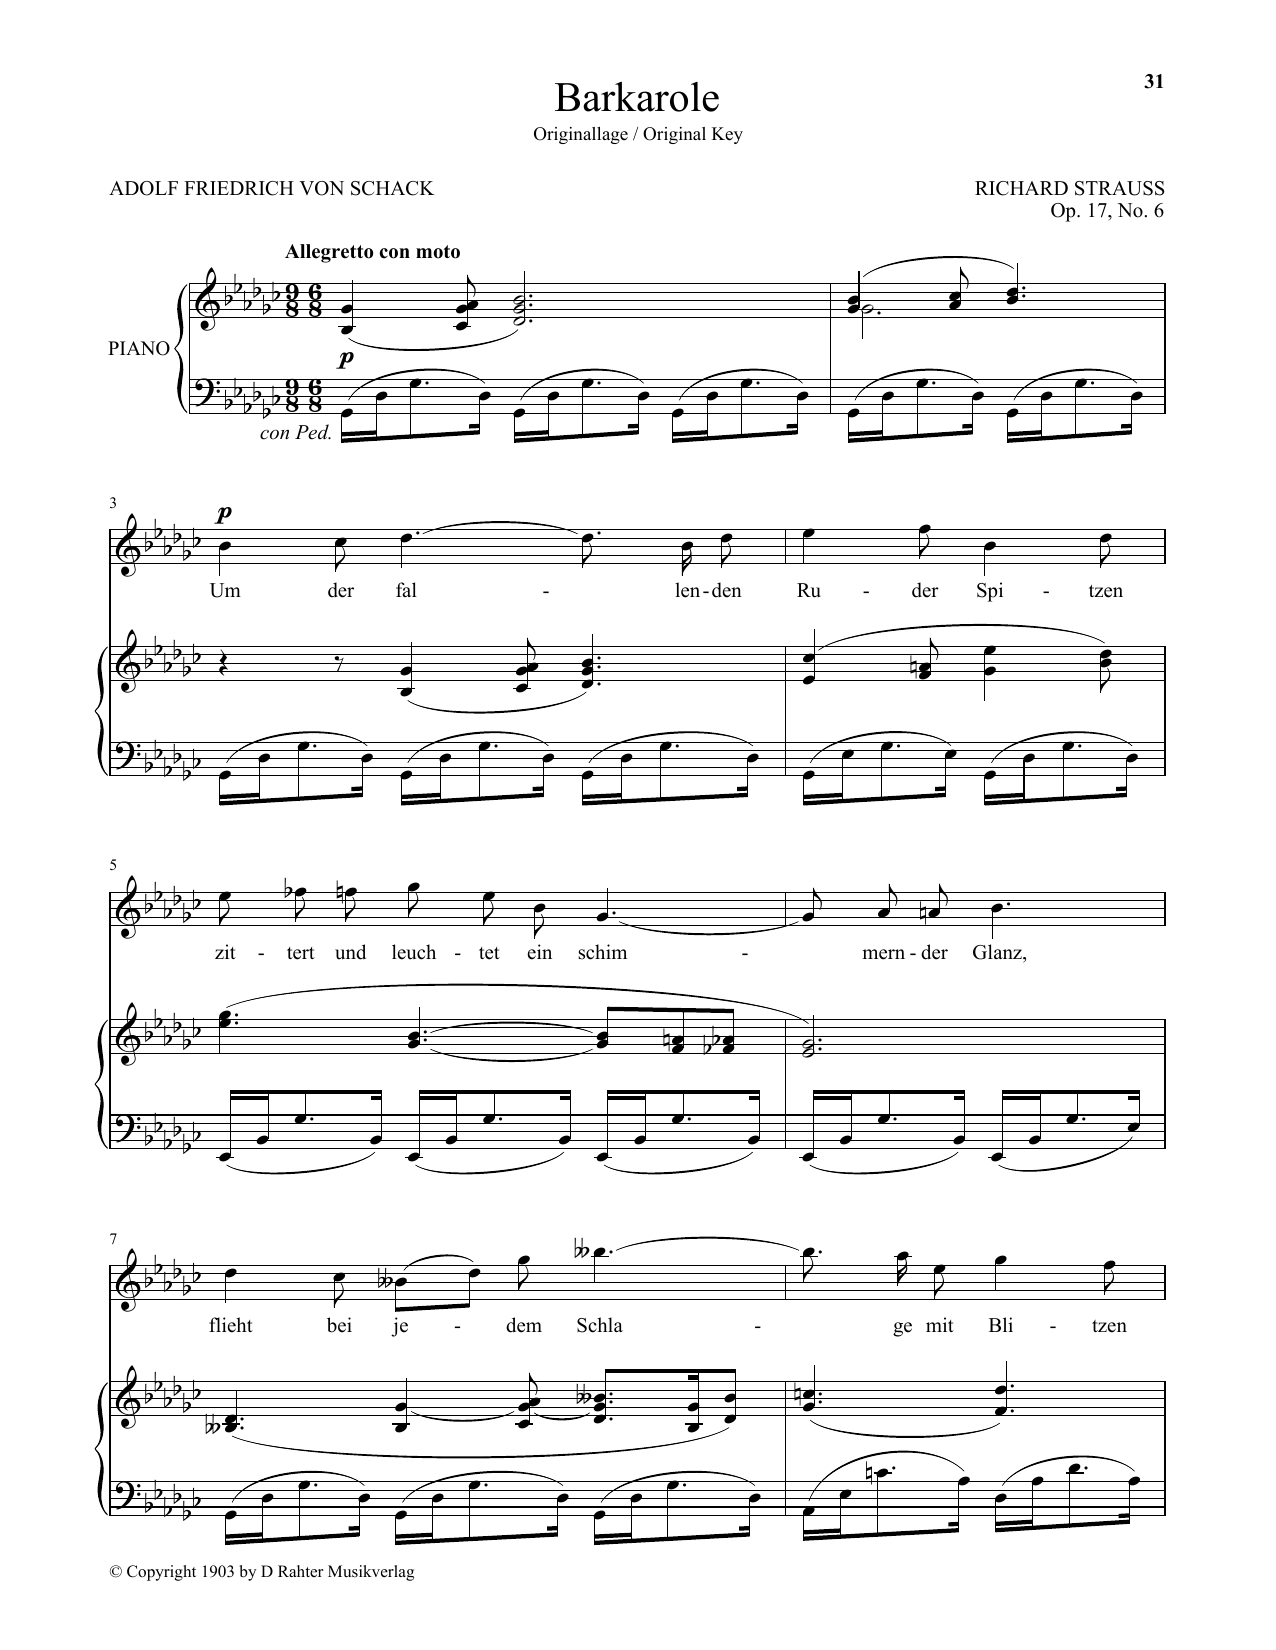 Download Richard Strauss Barkarole (High Voice) Sheet Music